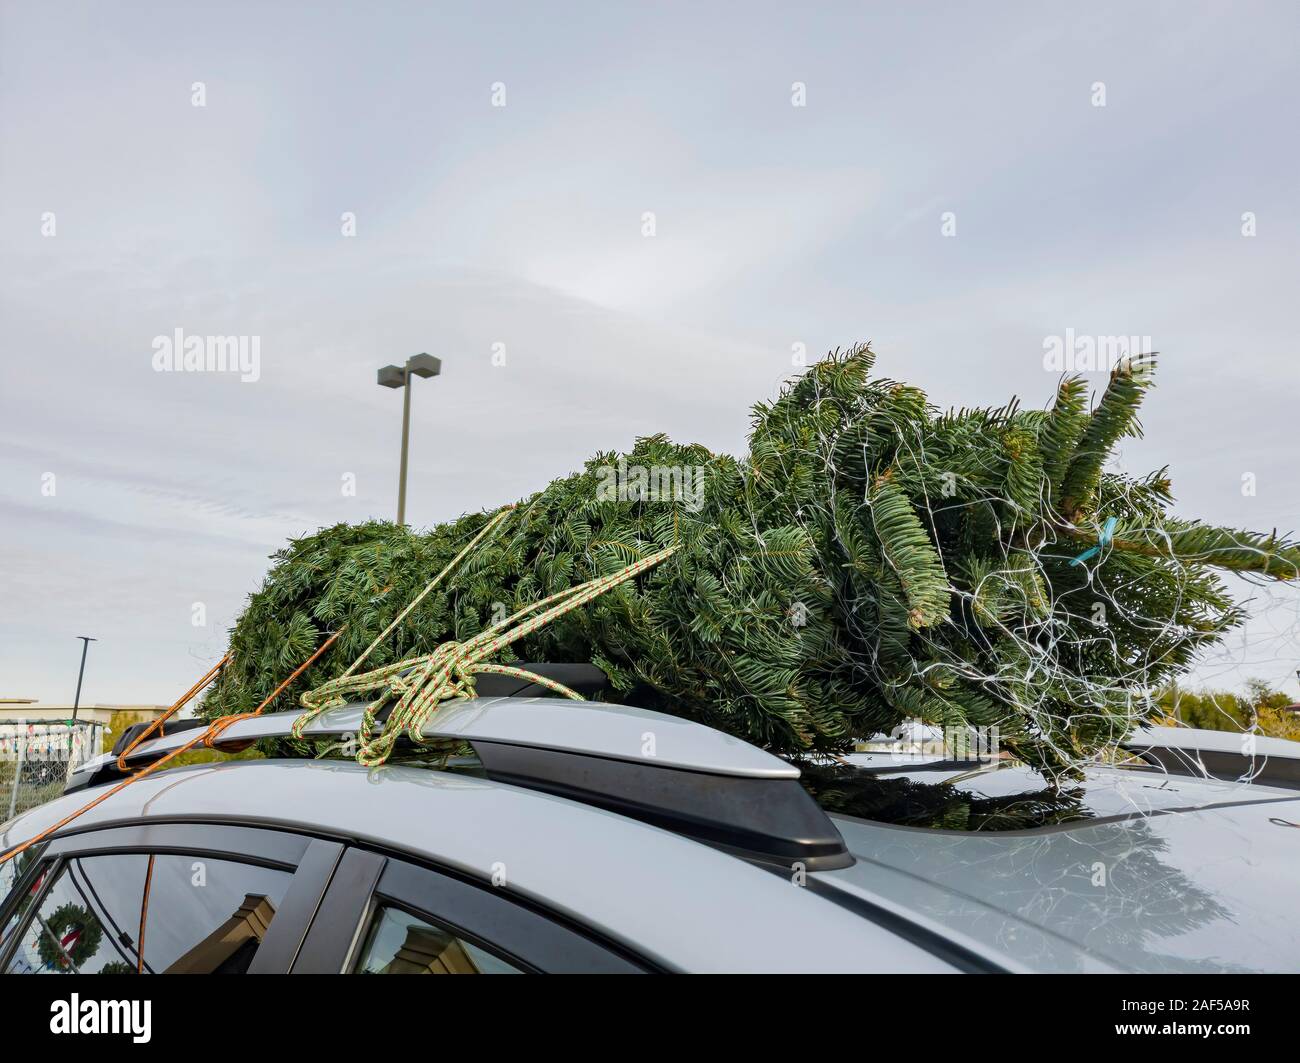 Las Vegas' official Christmas tree lit for the season — PHOTOS